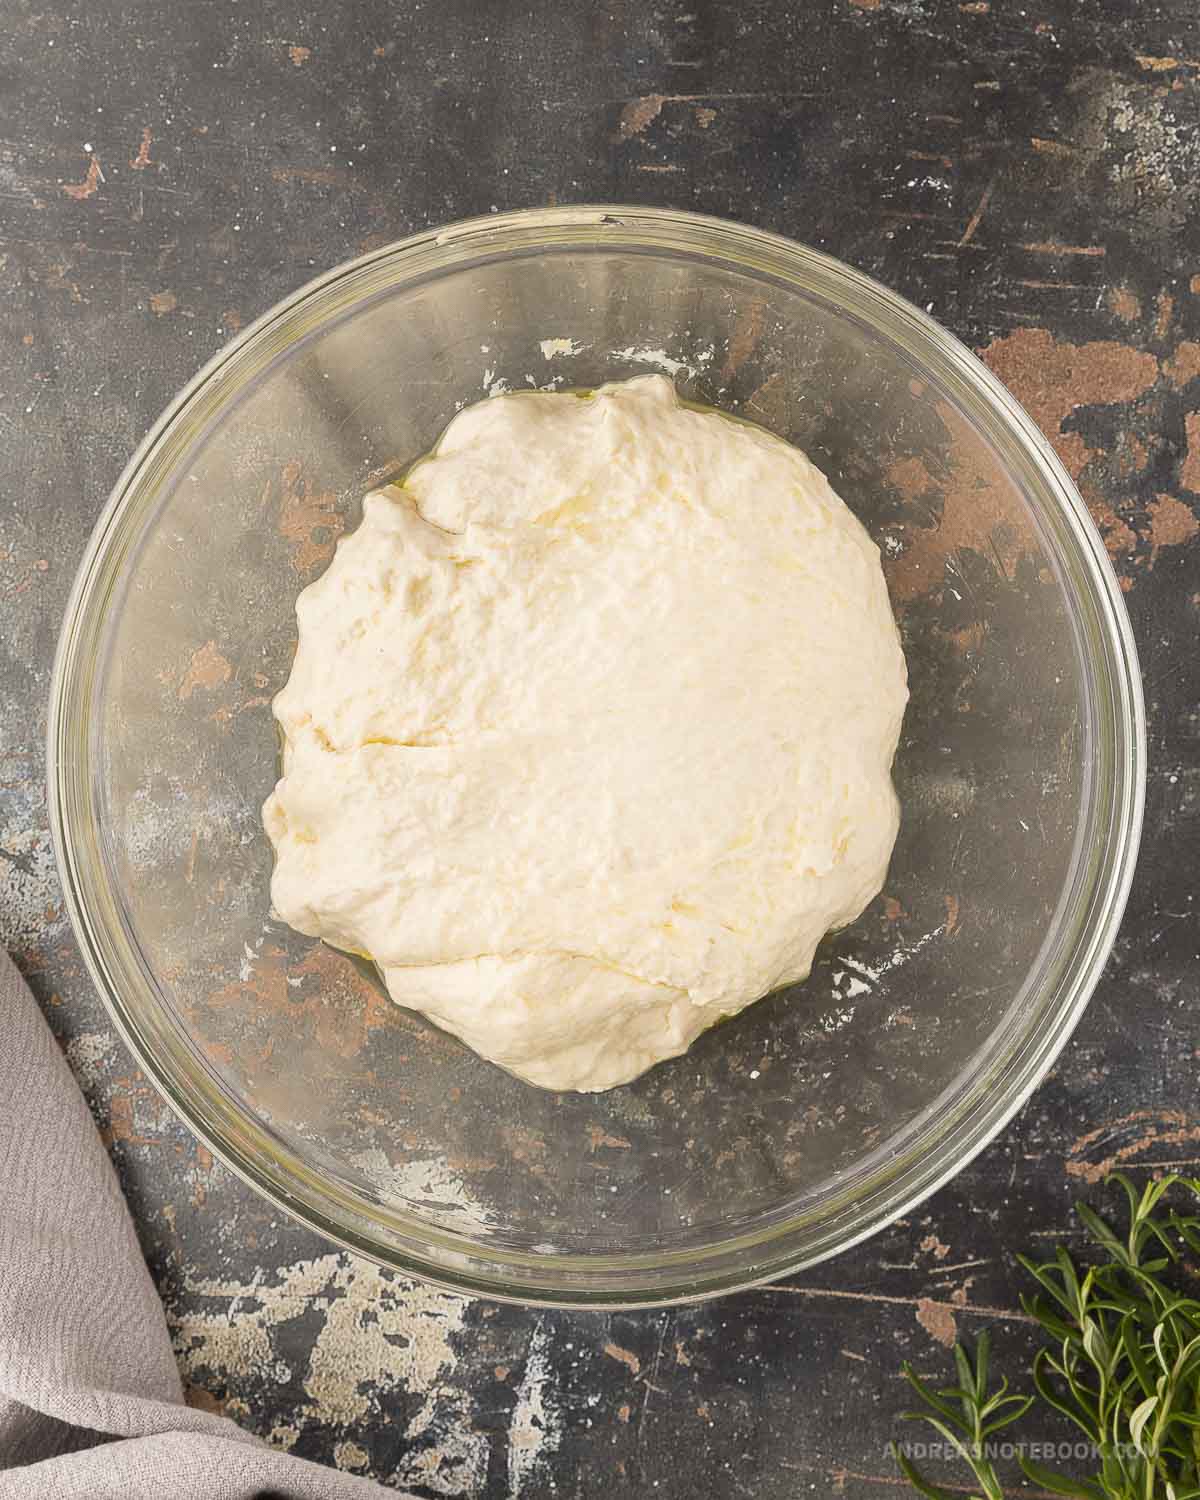 Kneeded focaccia bread dough in an oiled bowl.